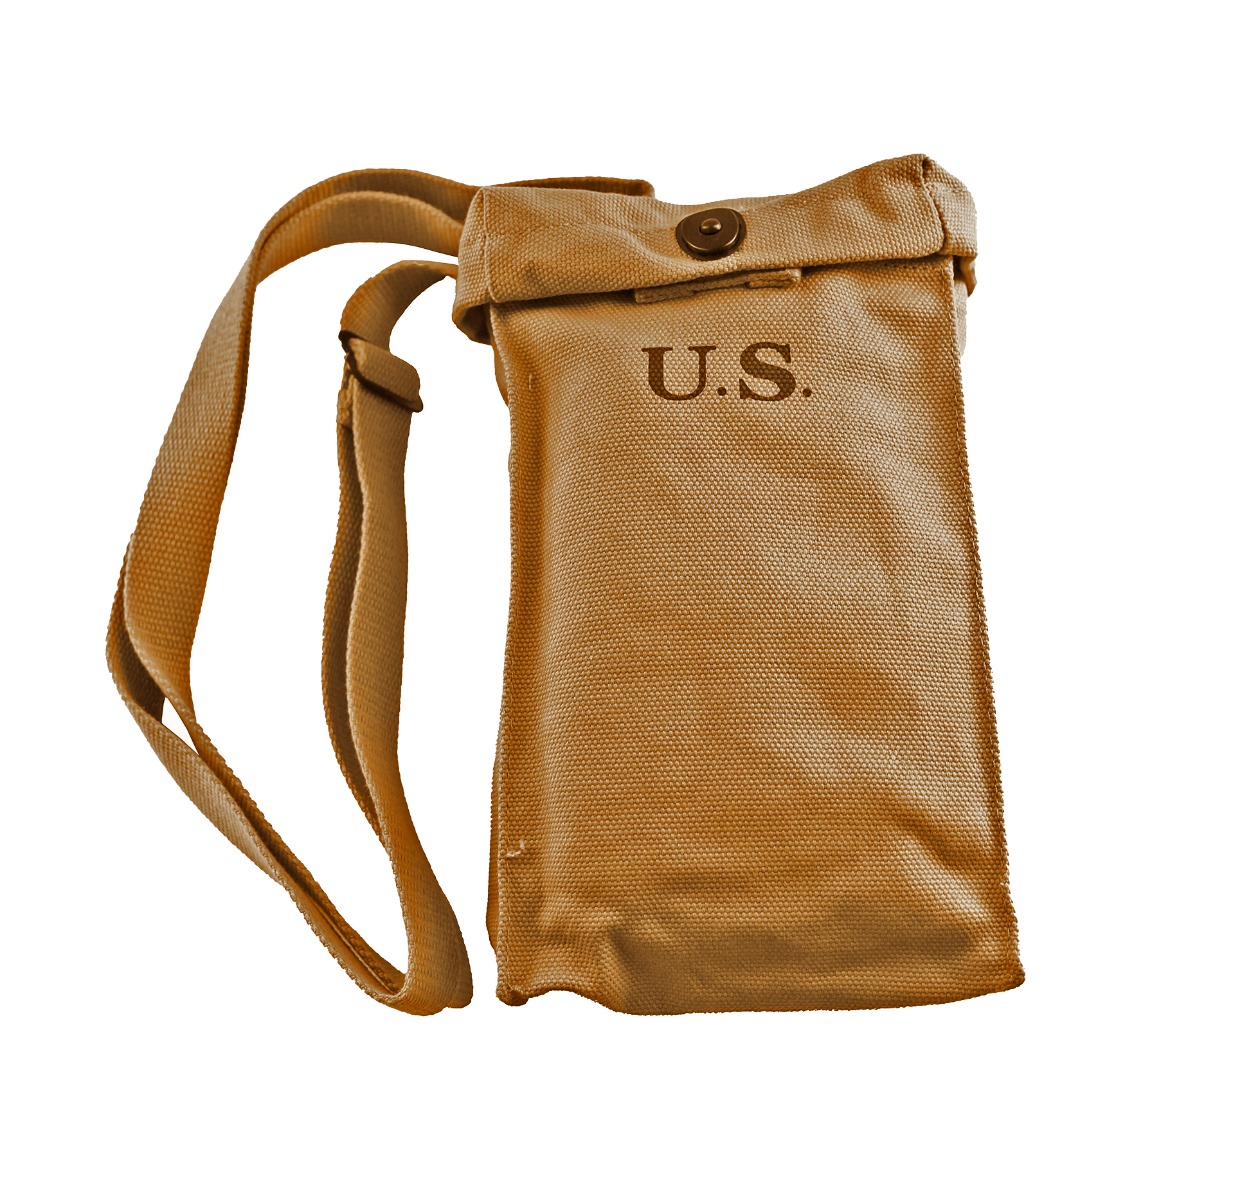 U.S. THOMPSON MAGAZINE BAG WITH STRAP